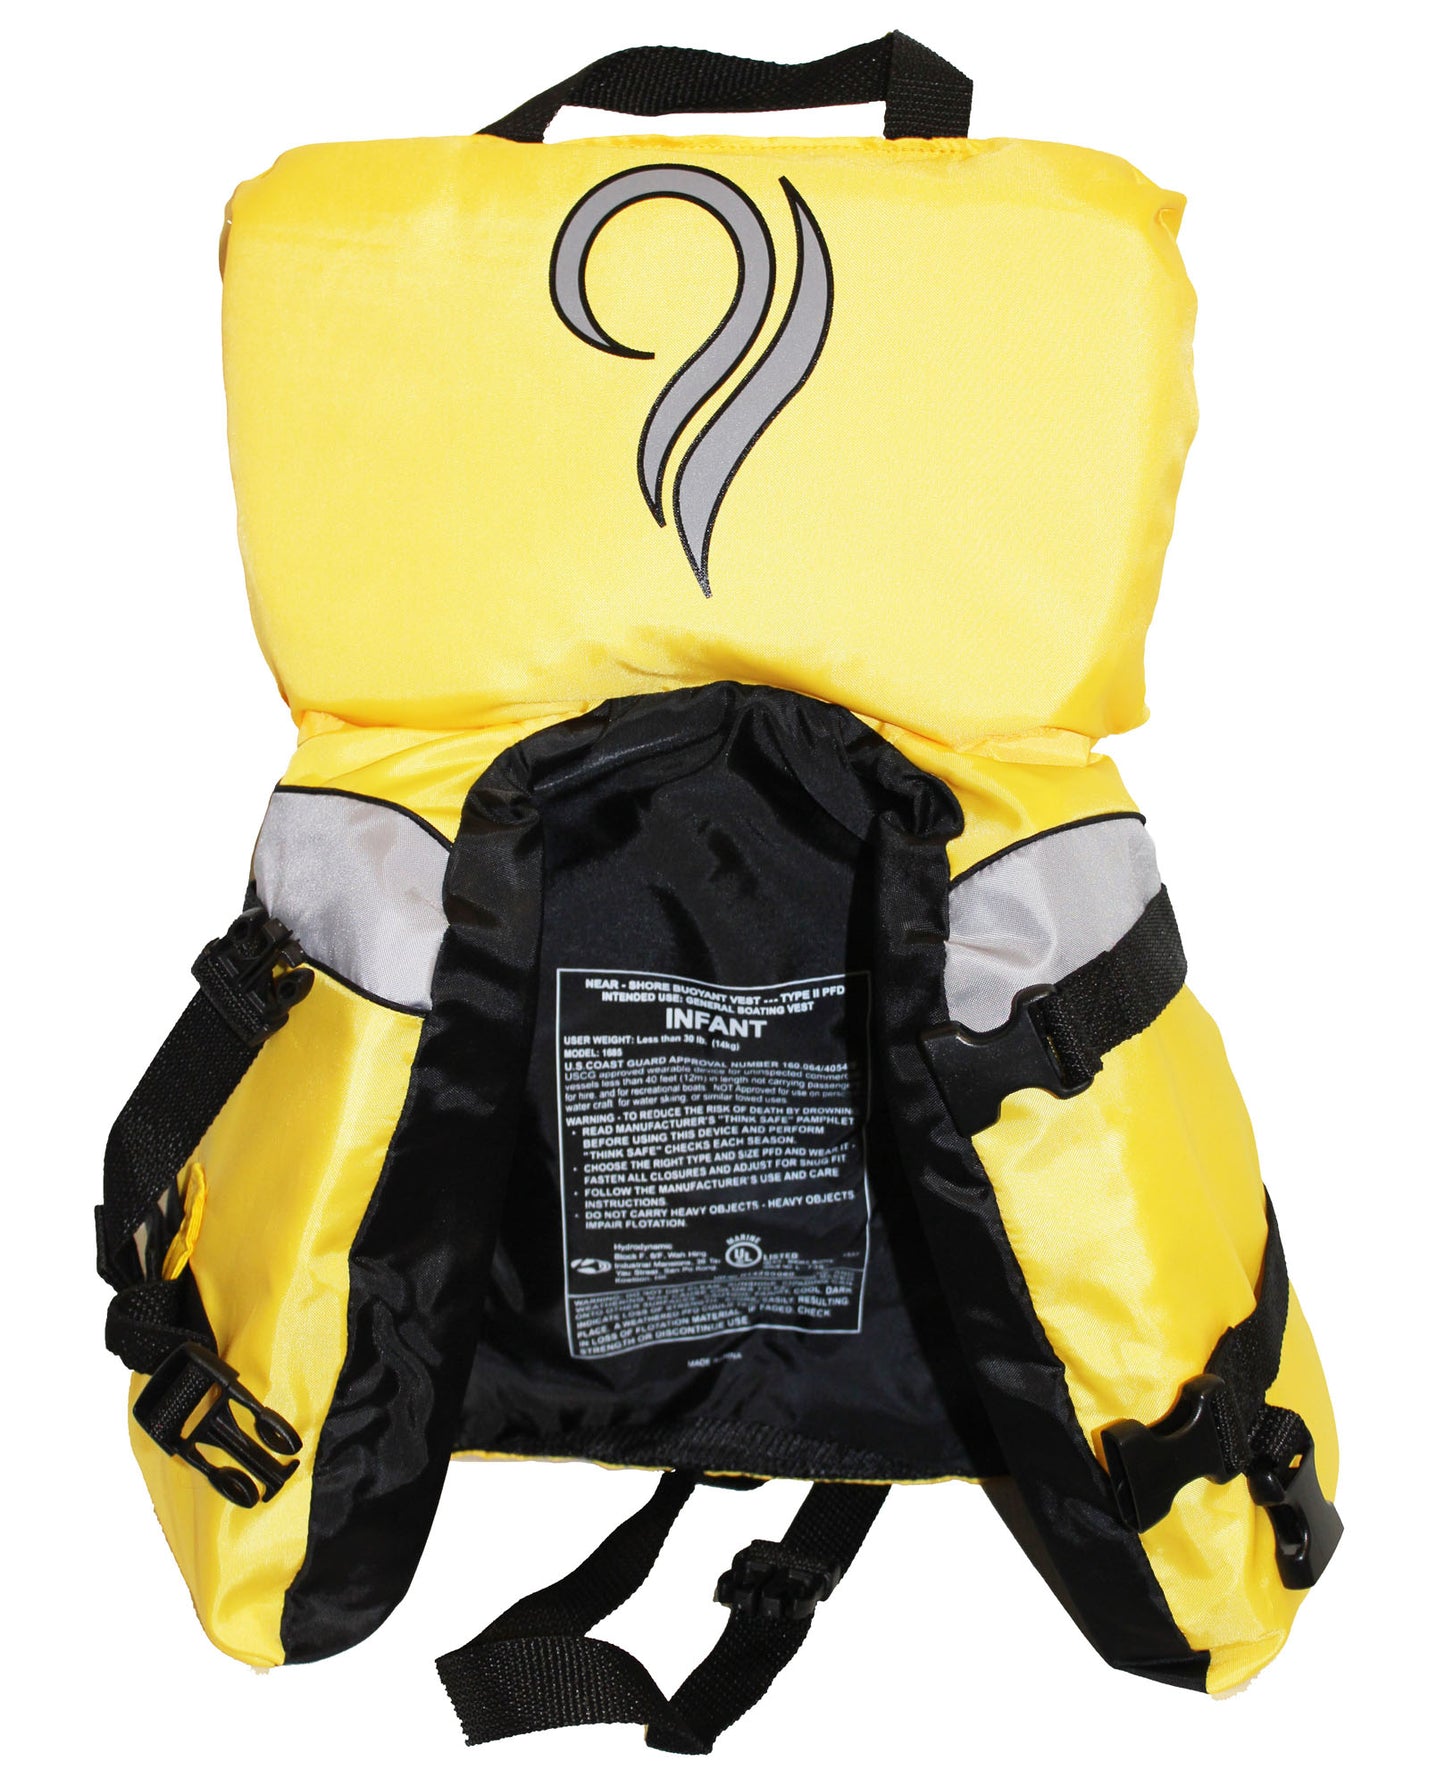 Bradley Infant Baby Life Jacket Vest | US Coast Guard Type III High Visibility